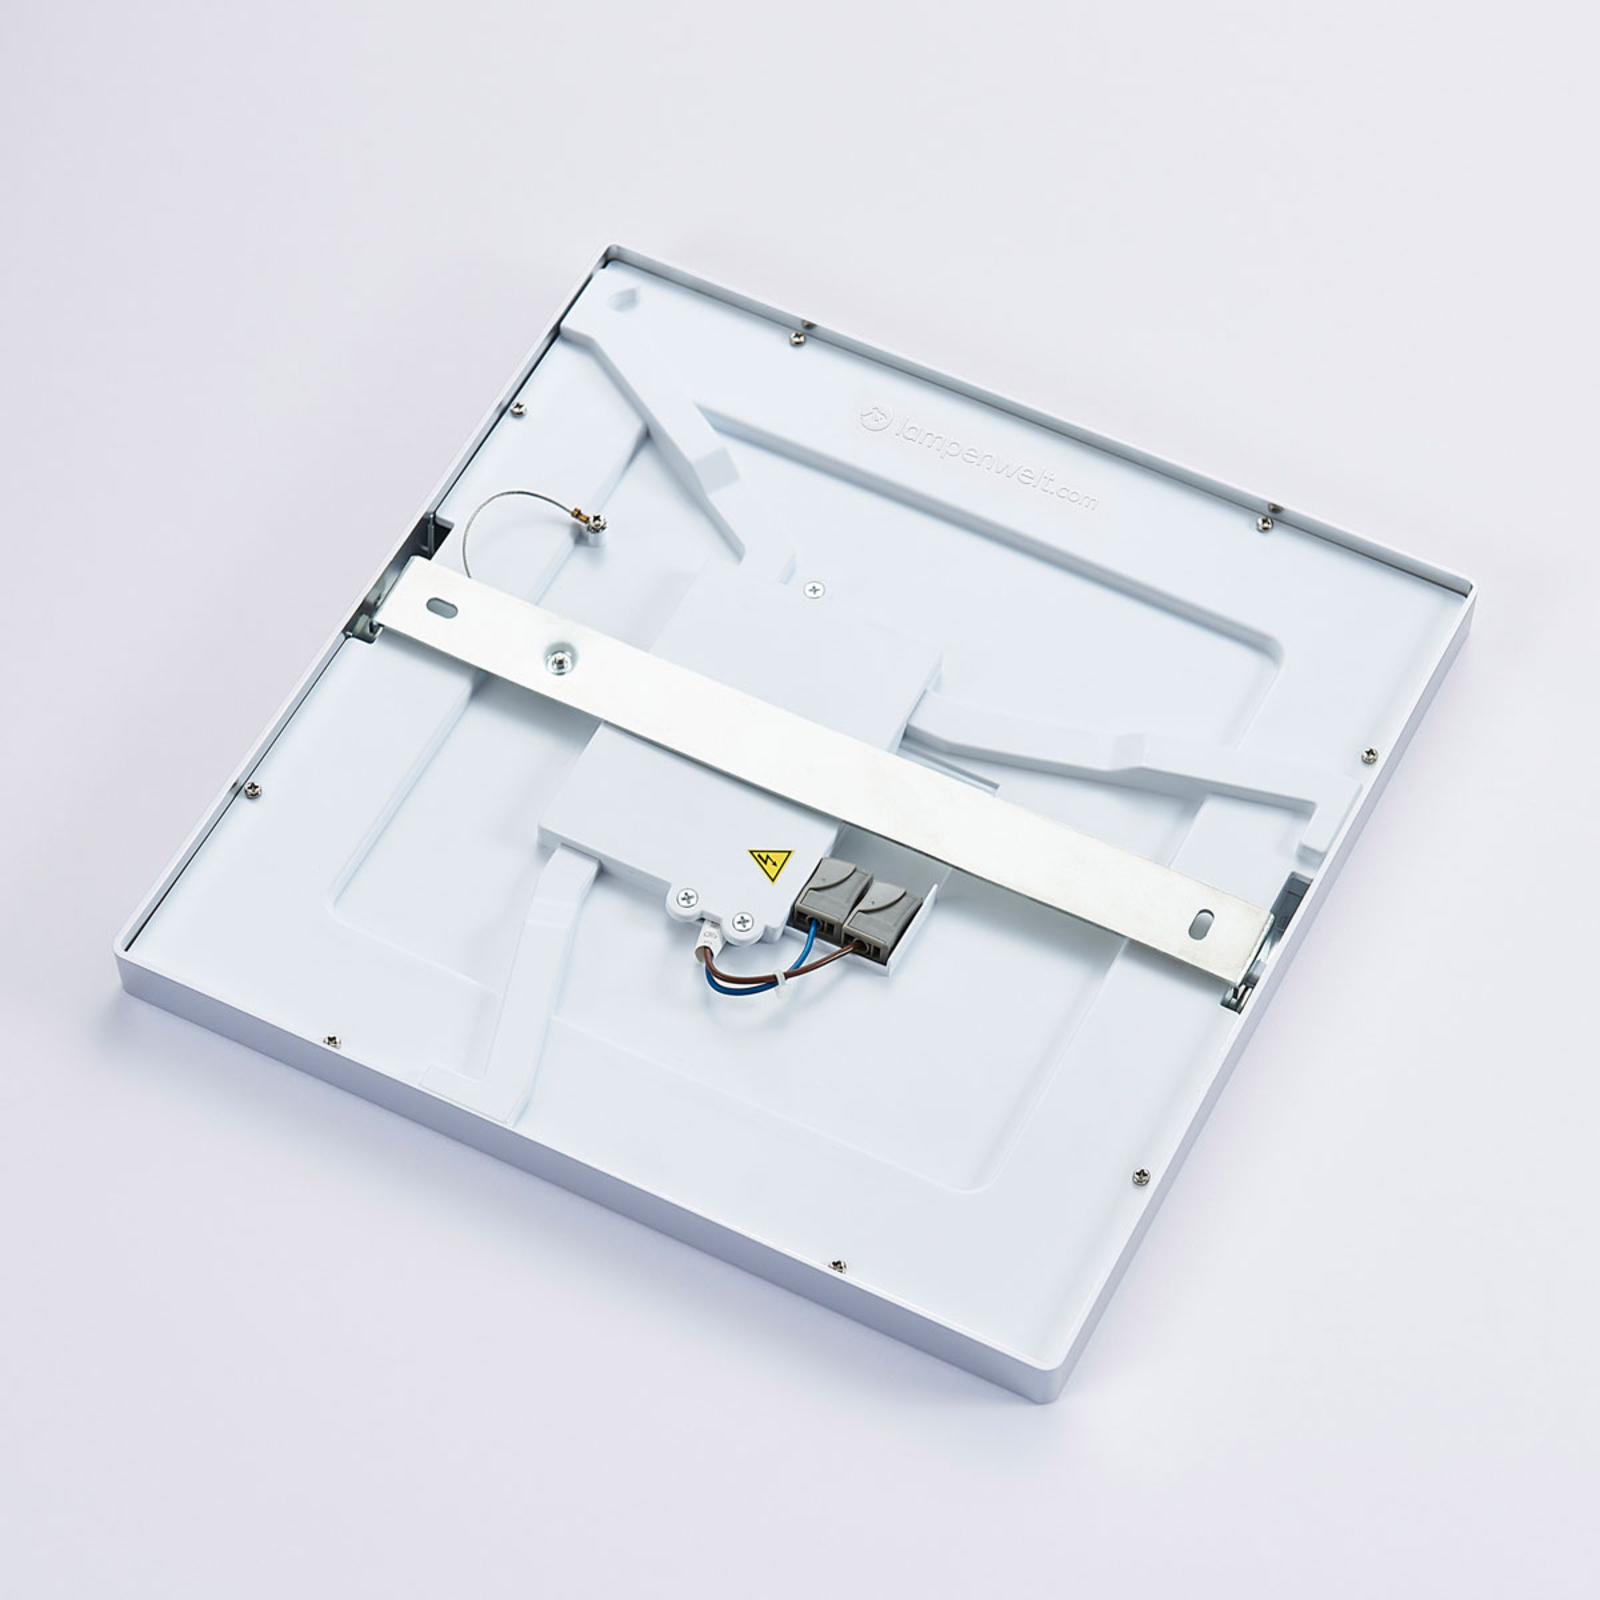 Stropné svietidlo Solvie LED, biele, hranaté, 30 x 30 cm